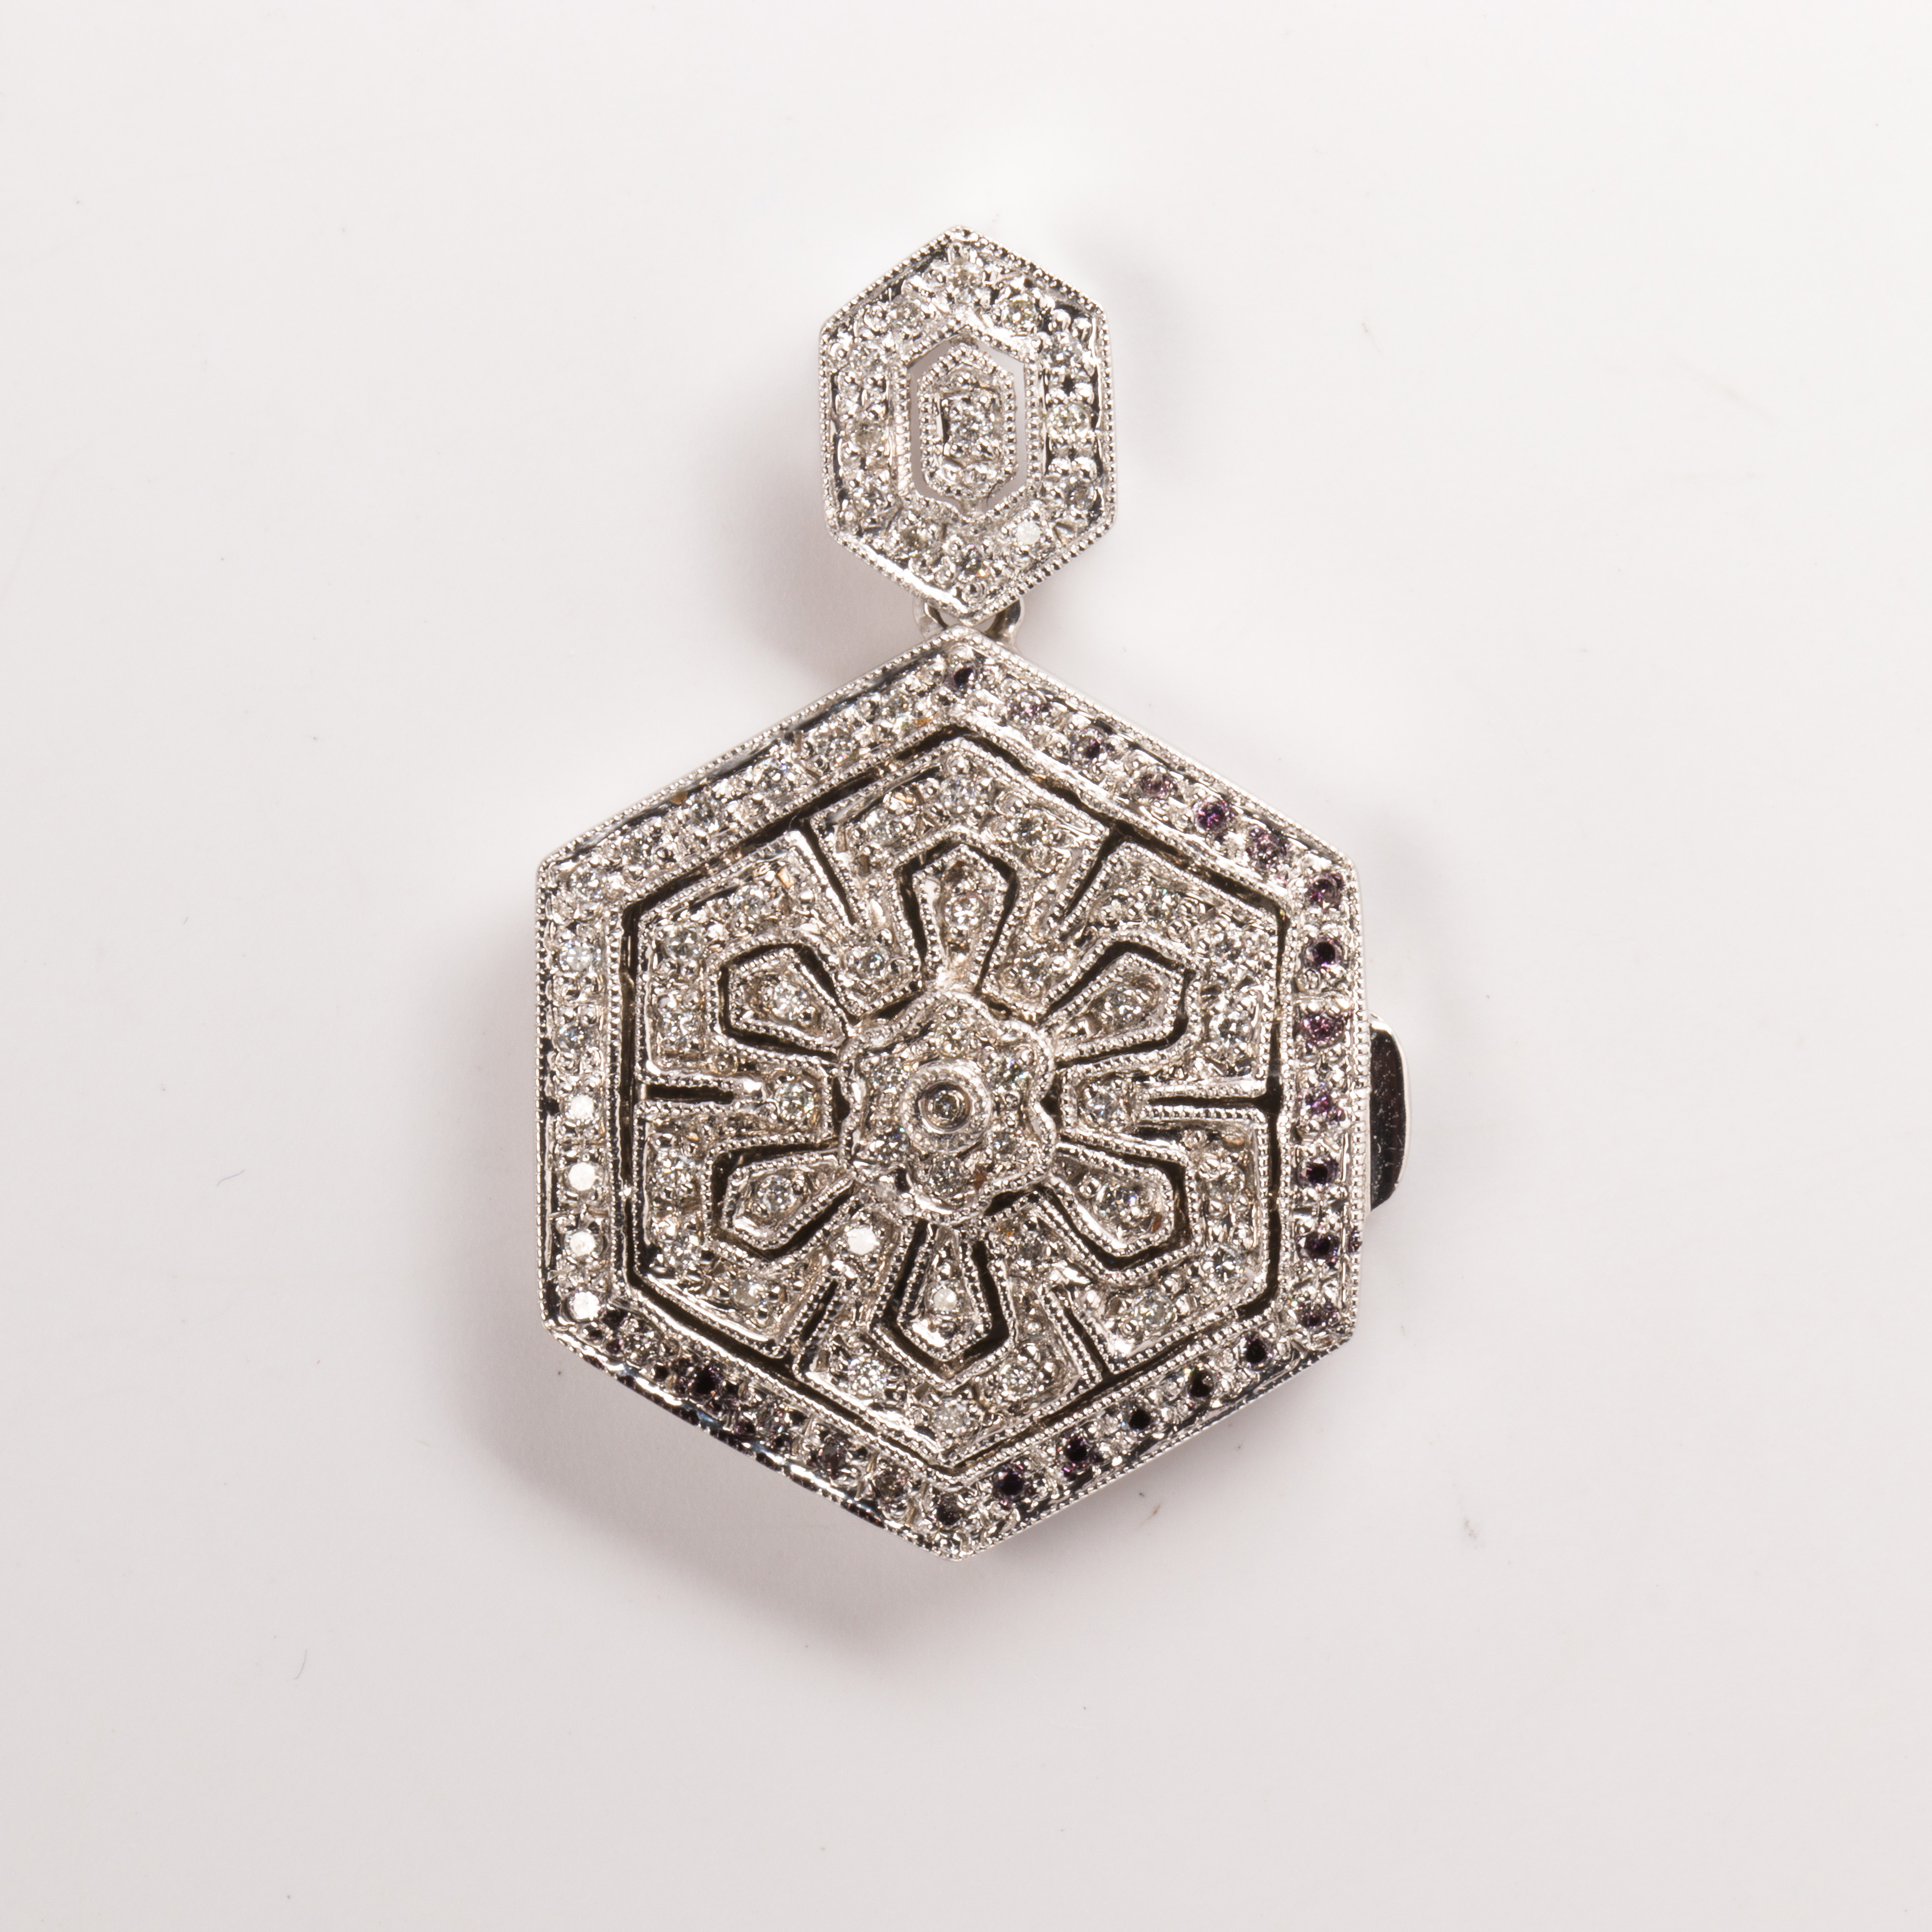 A diamond and fourteen karat white gold locket pendant